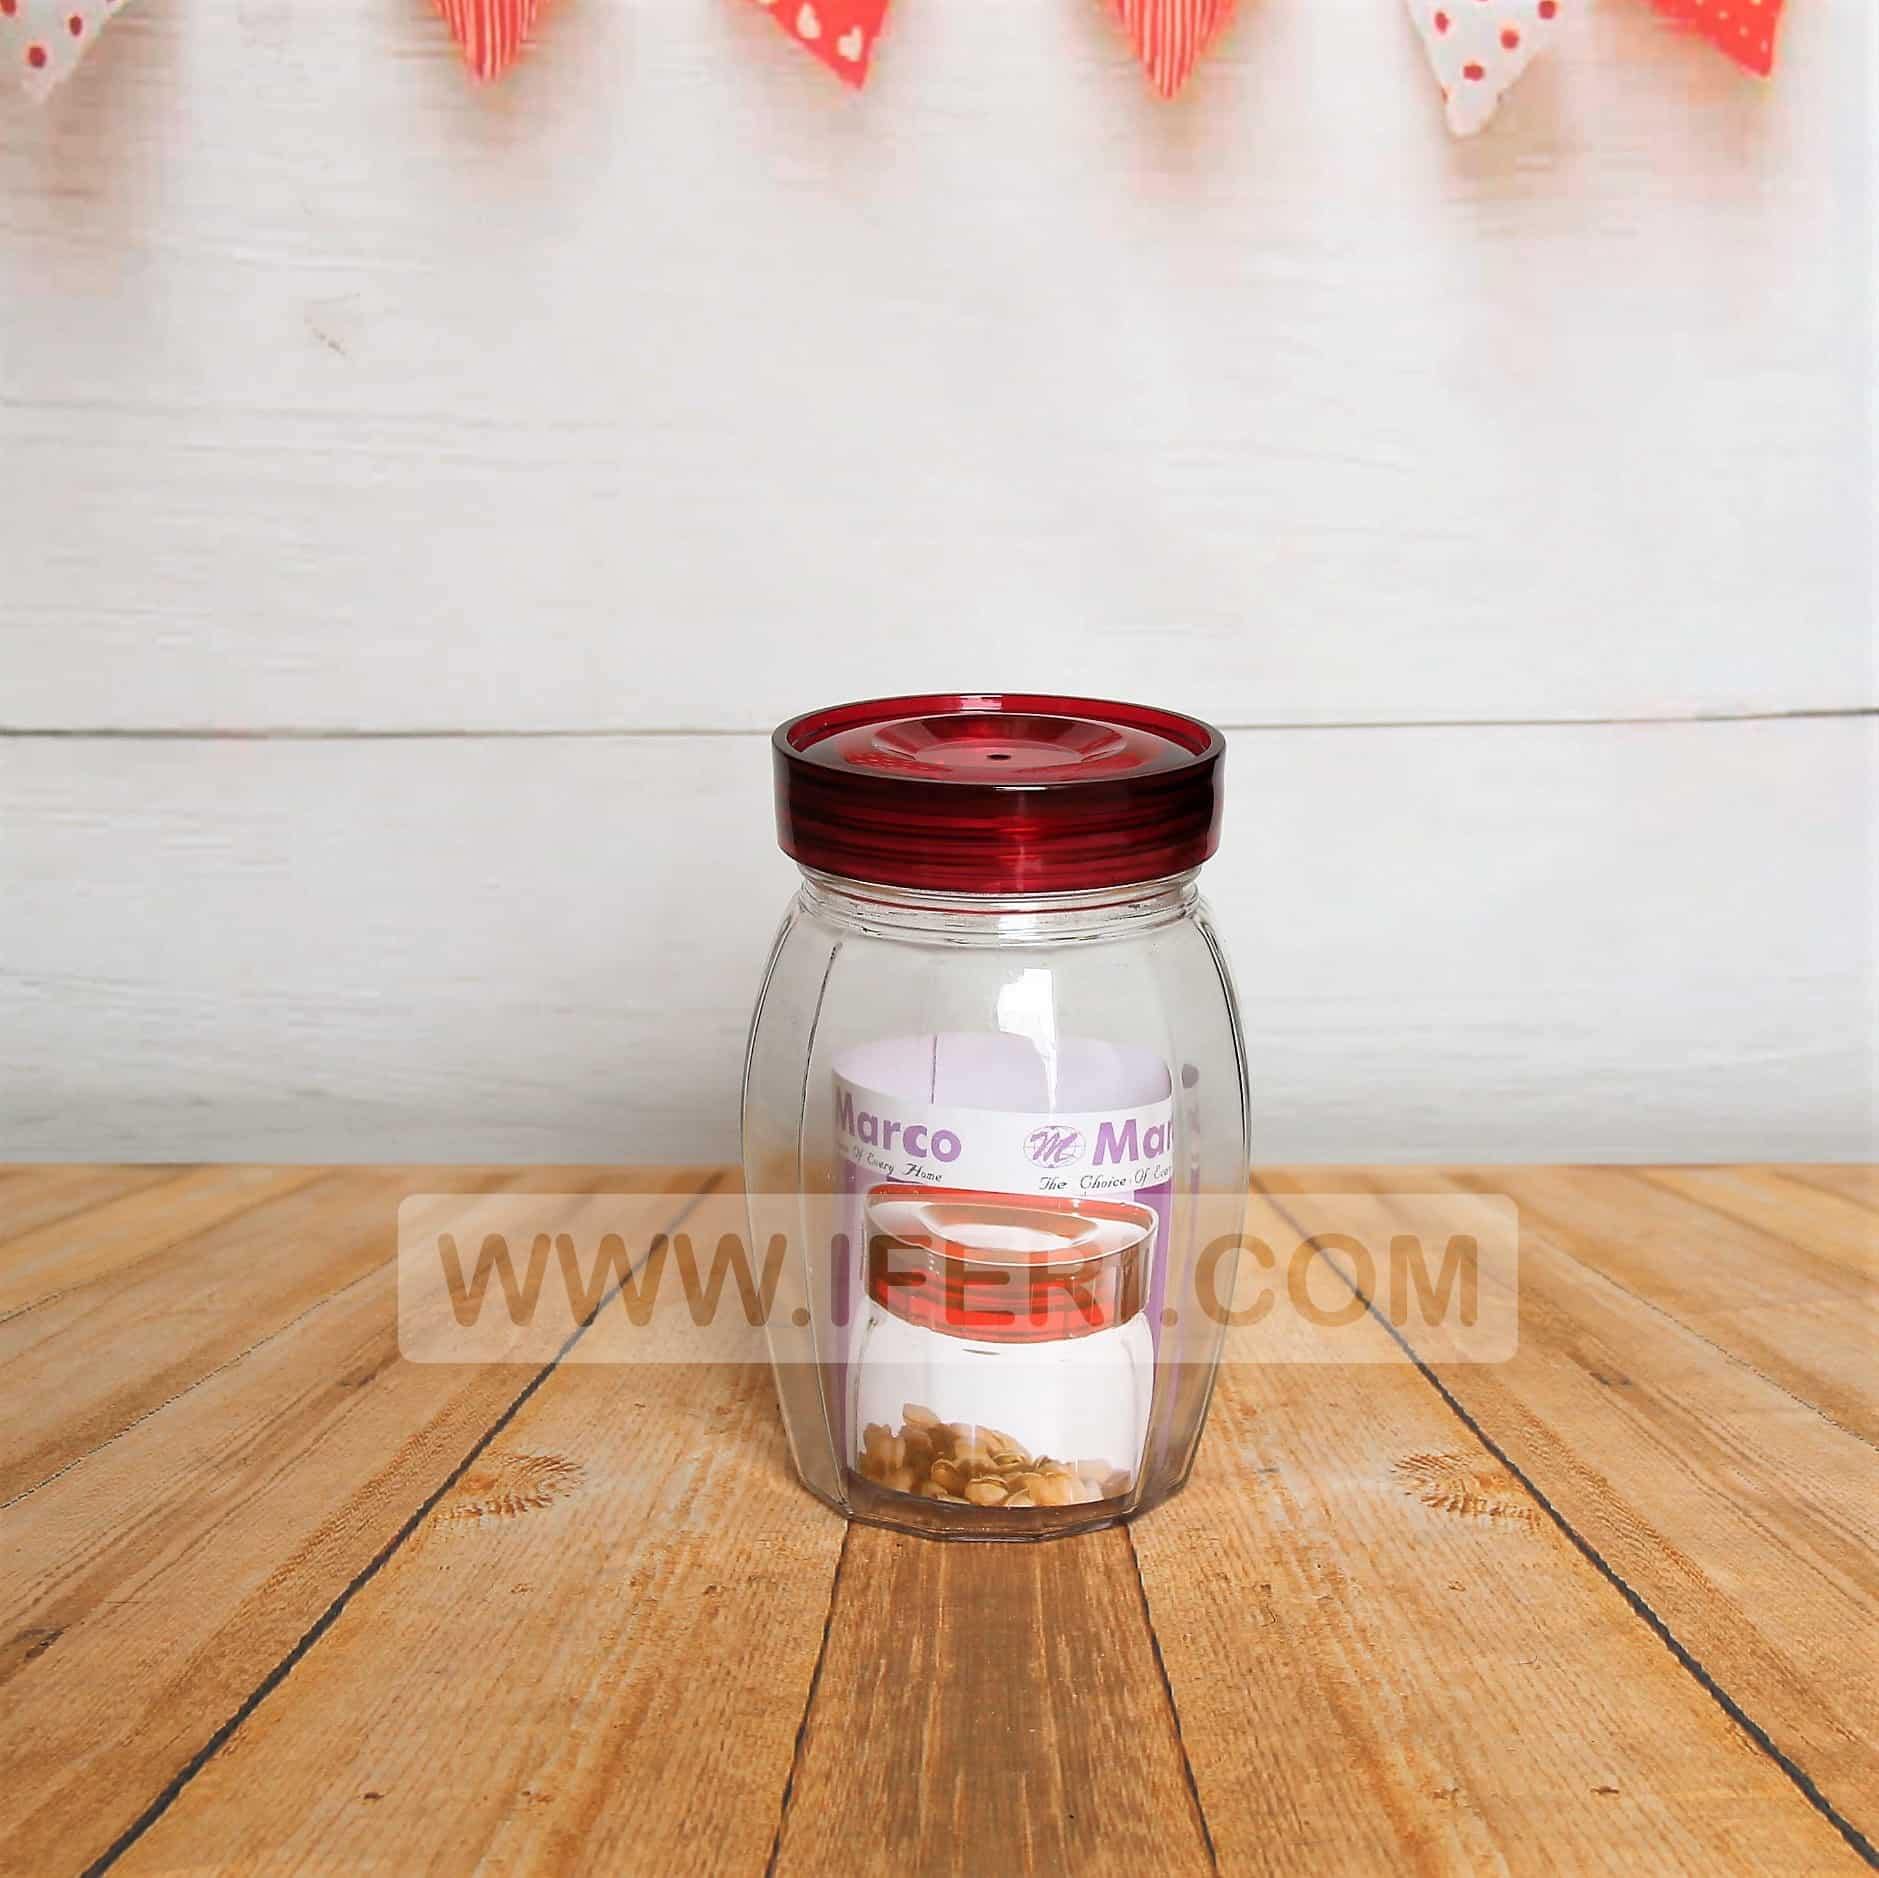 800ml Airtight Glass Cookie Jar UT0635 - Price in BD at iferi.com